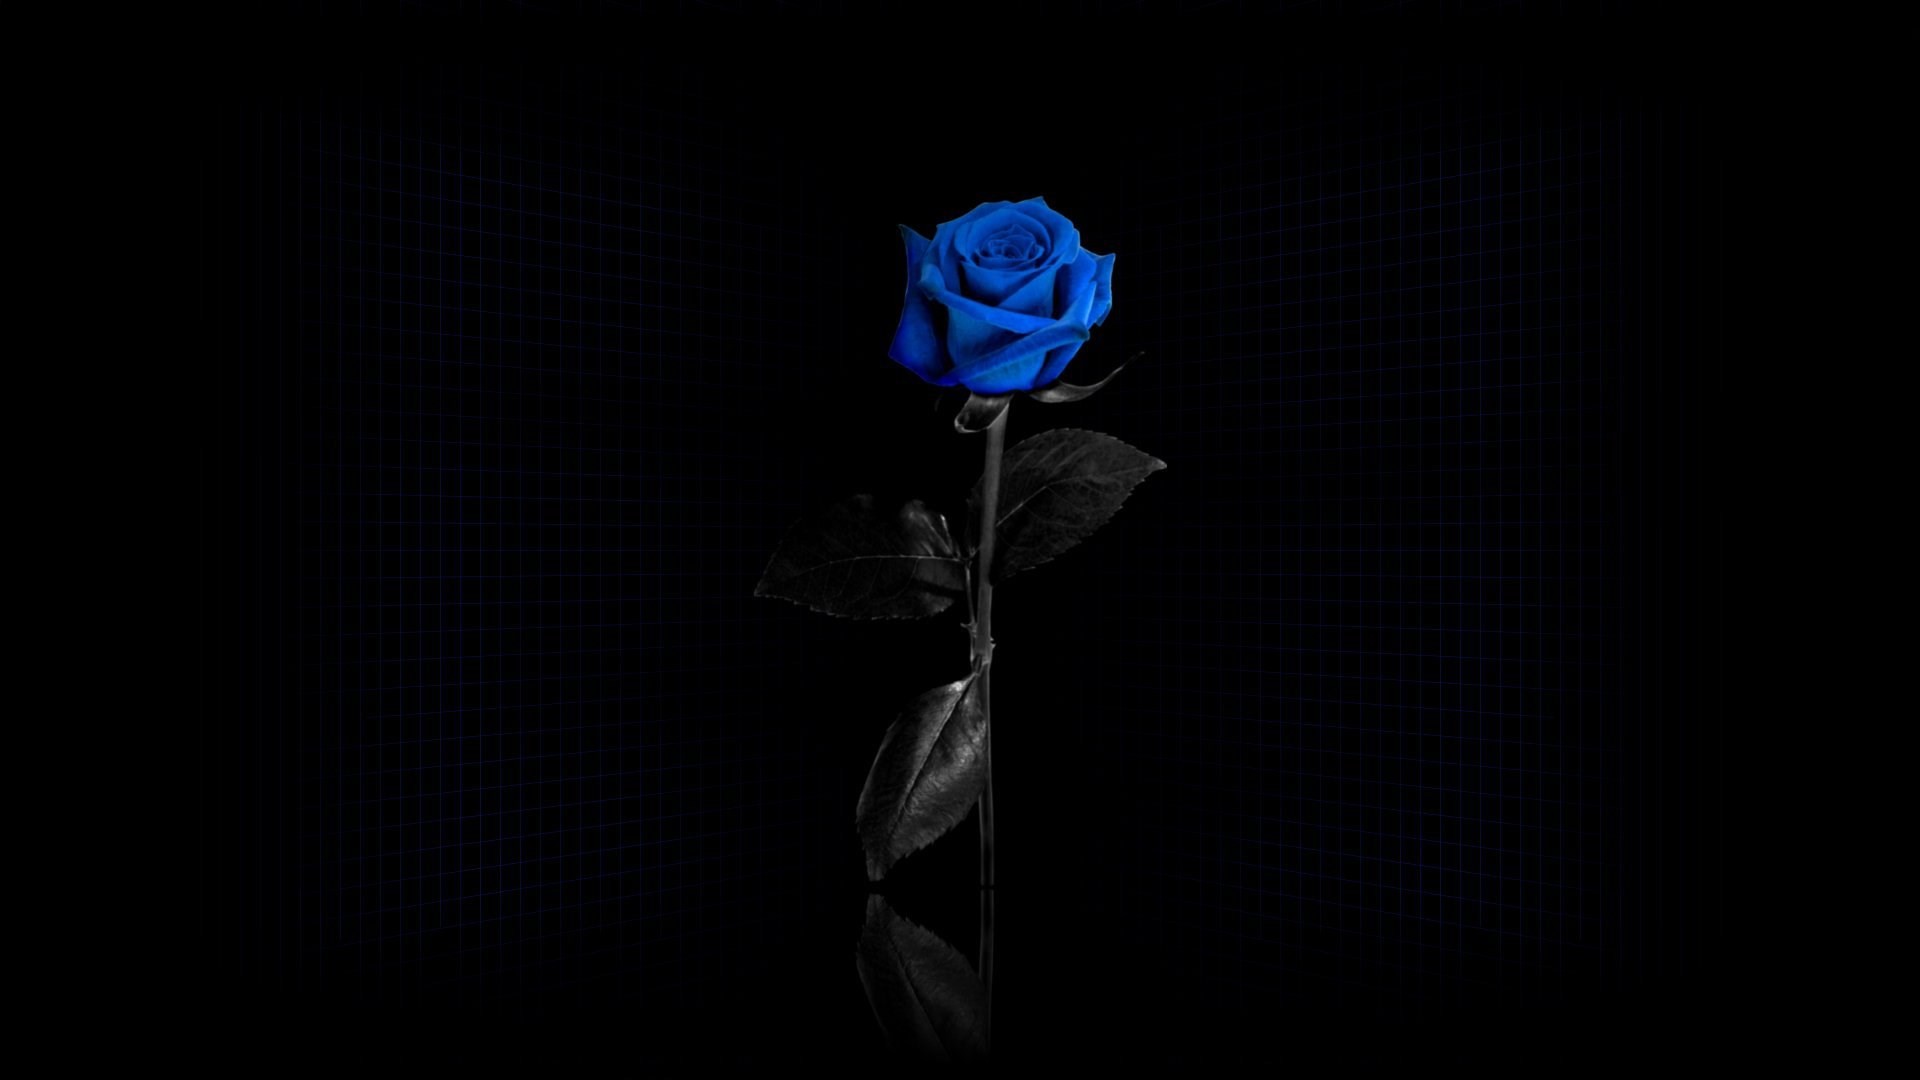 Blue rose wallpaper 1080p windows by Edita Sinclair 2016 09 19